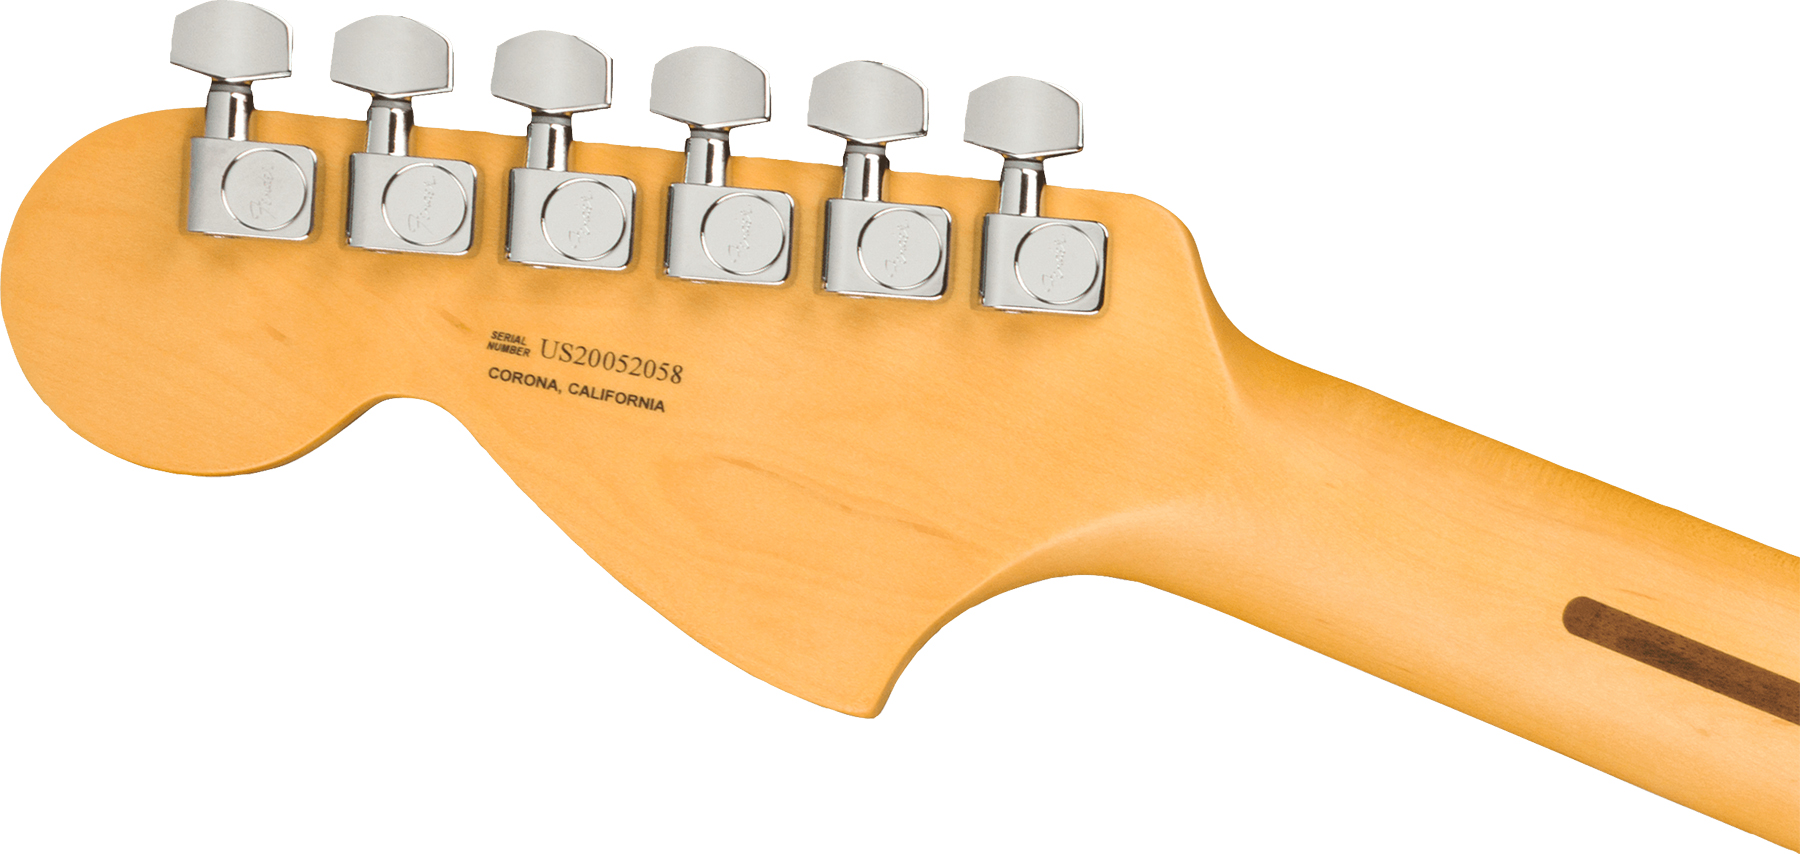 Fender Tele Deluxe American Professional Ii Usa Mn - Olympic White - E-Gitarre in Teleform - Variation 1